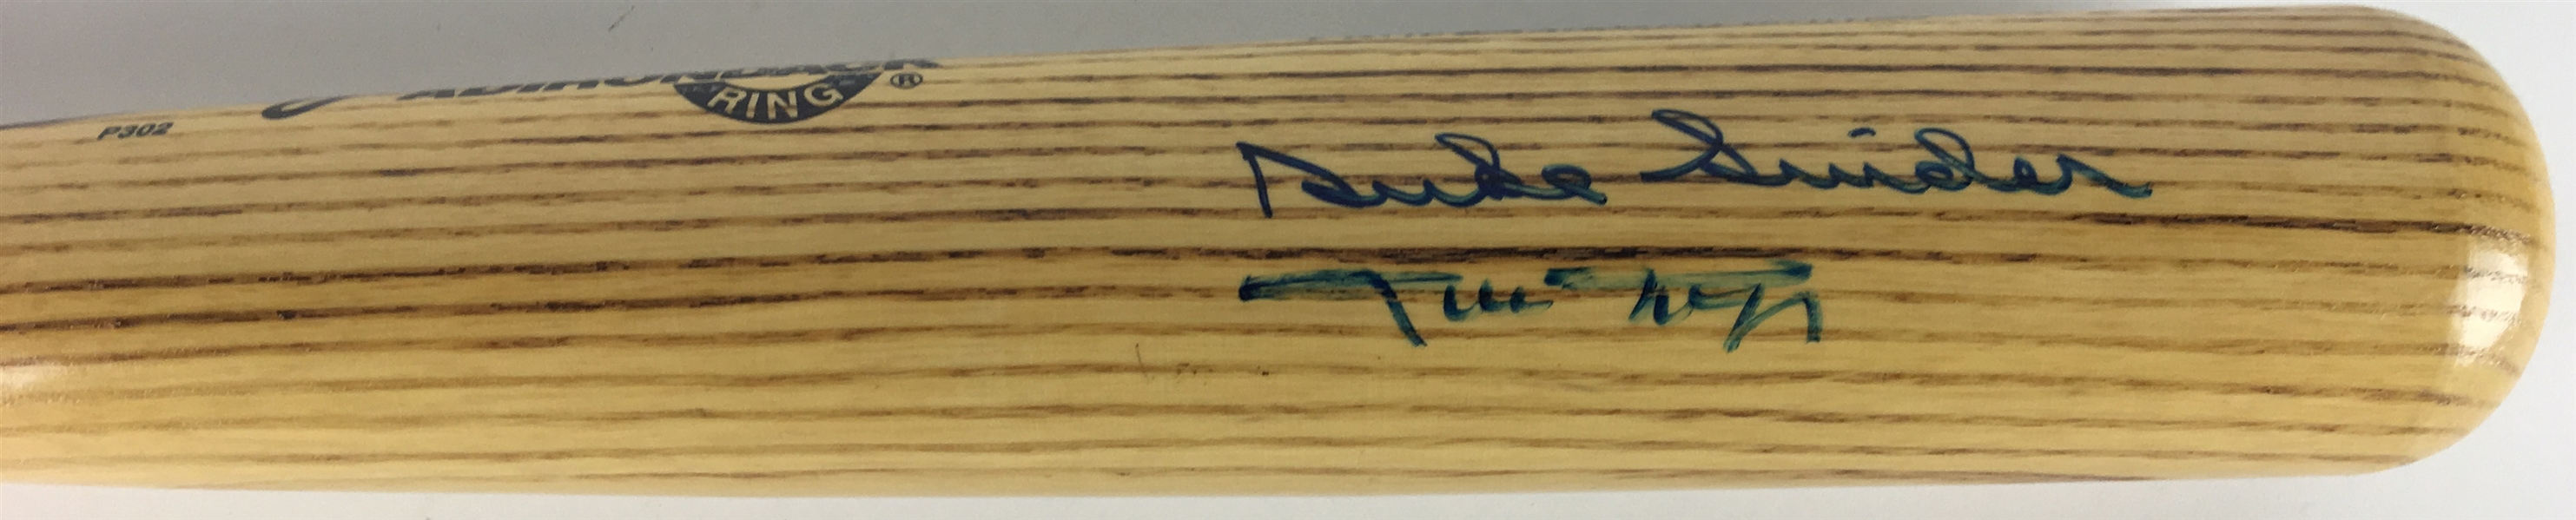 Duke Snider & Willie Mays Dual Signed Baseball Bat (PSA/DNA)